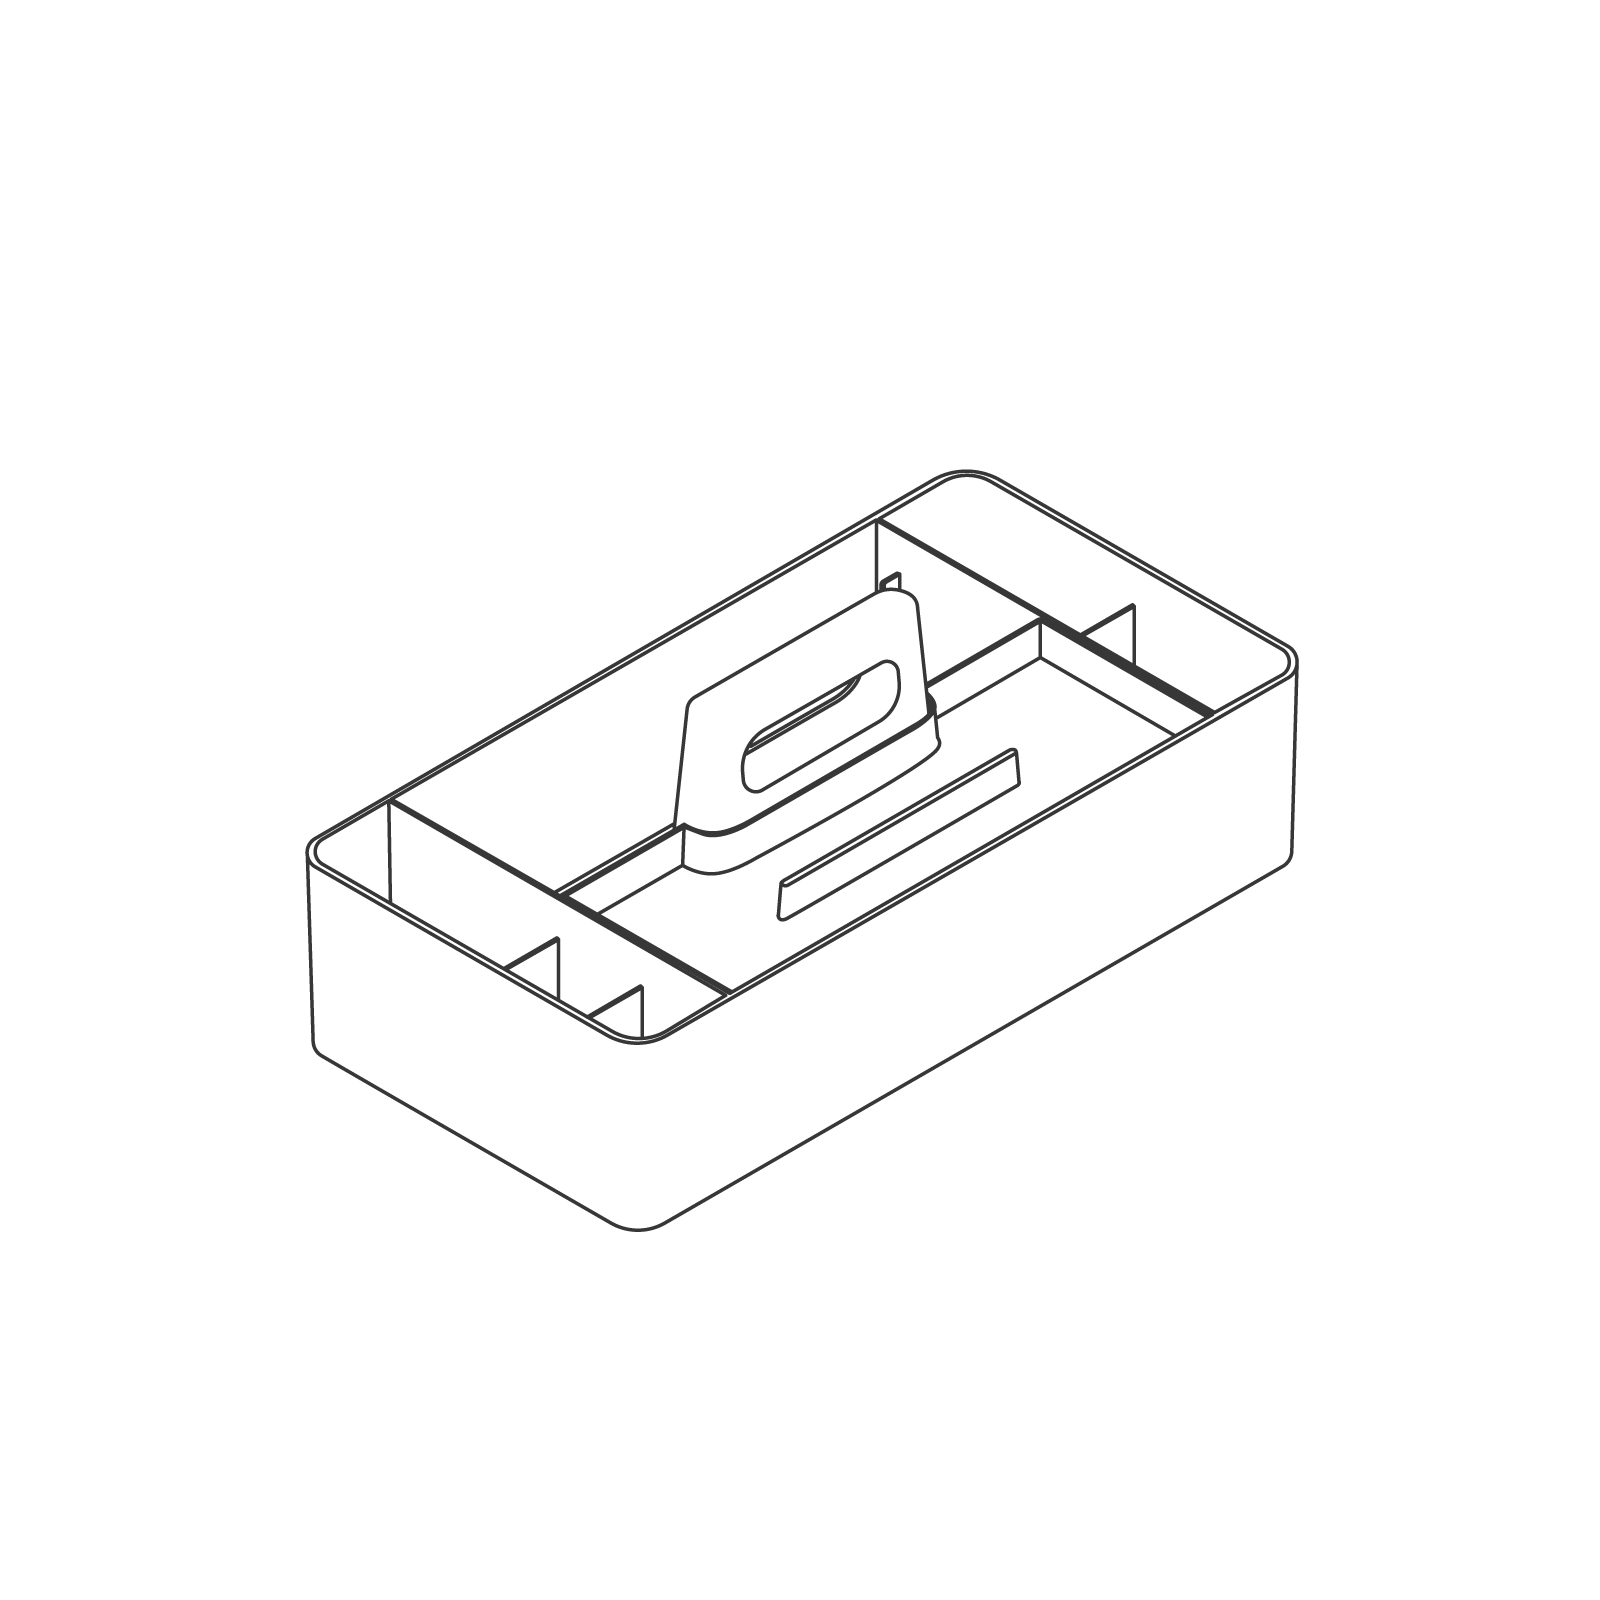 Un dibujo - Caja para útiles de trabajo OE1